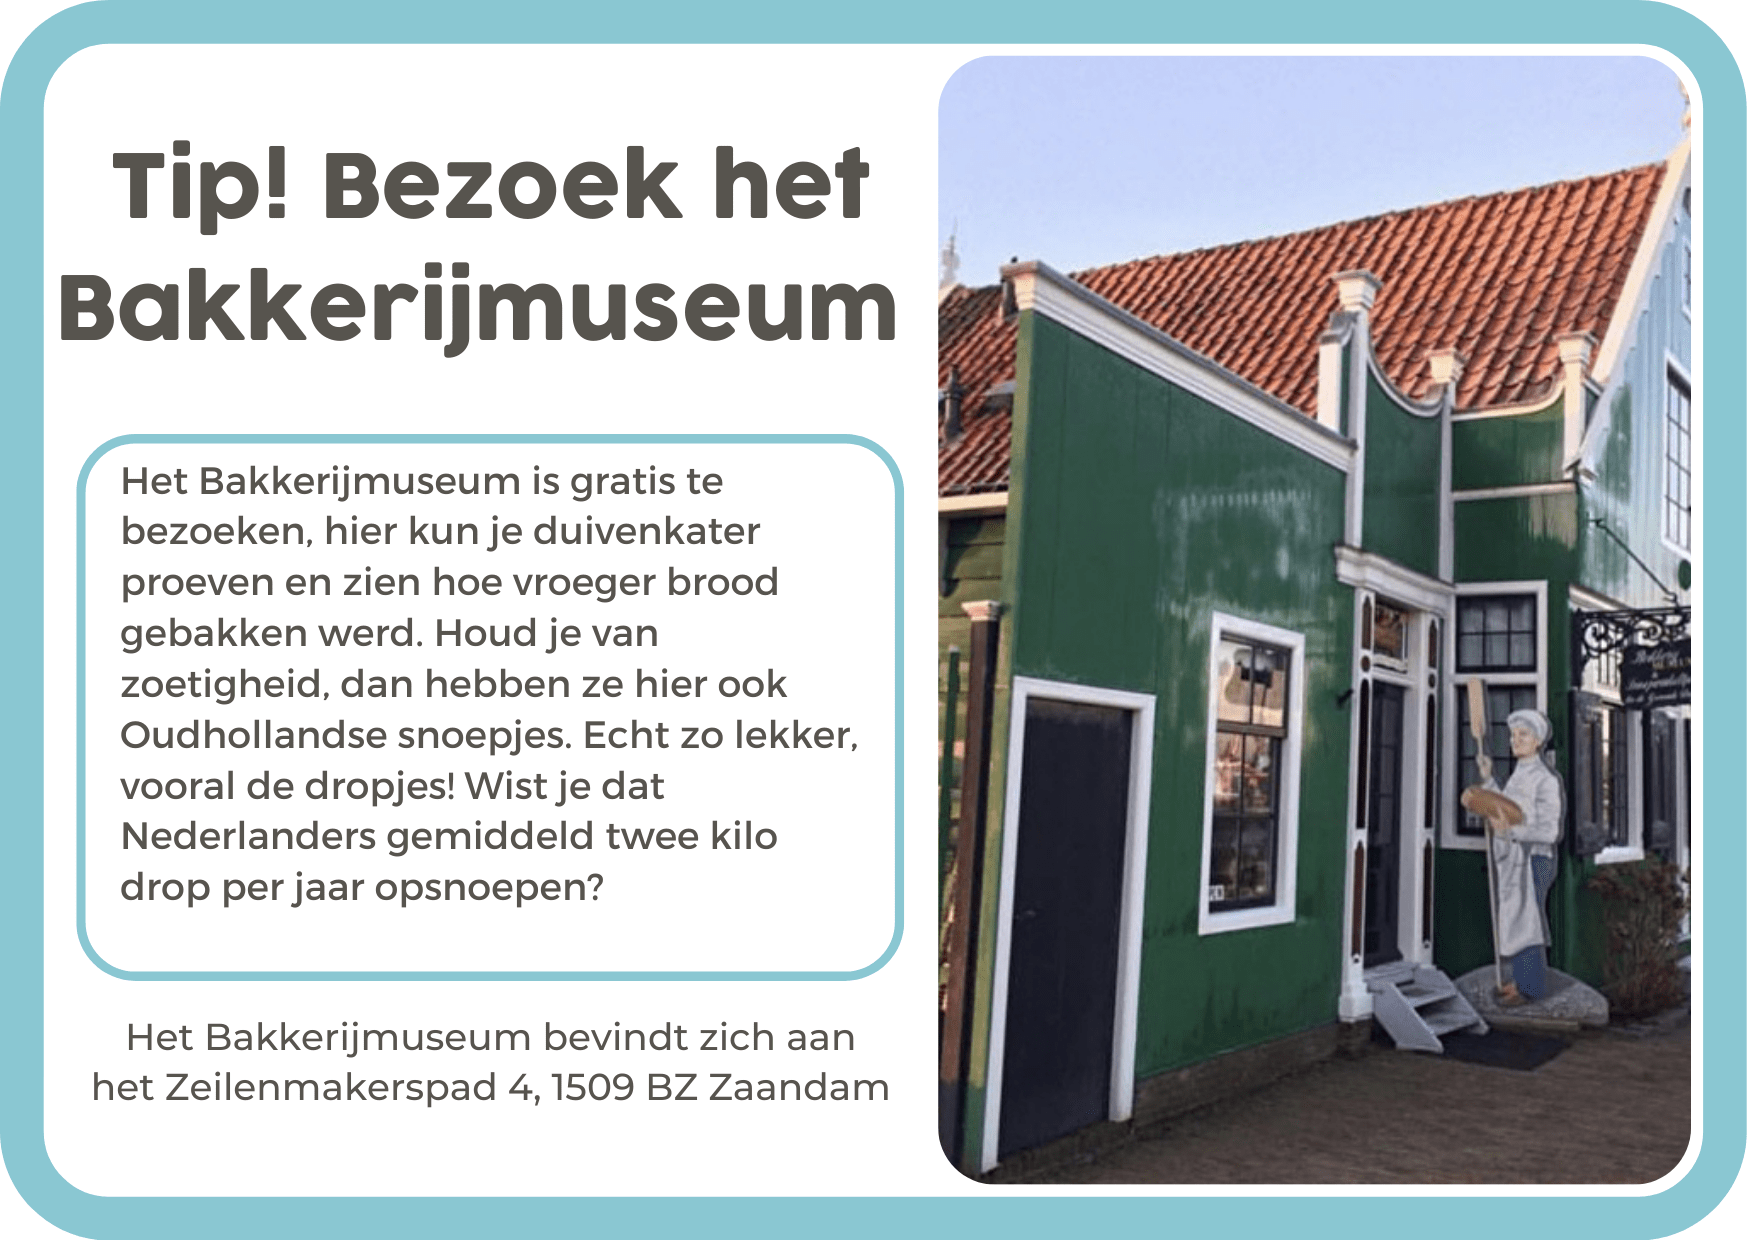 3. NL Bakkerijmuseum